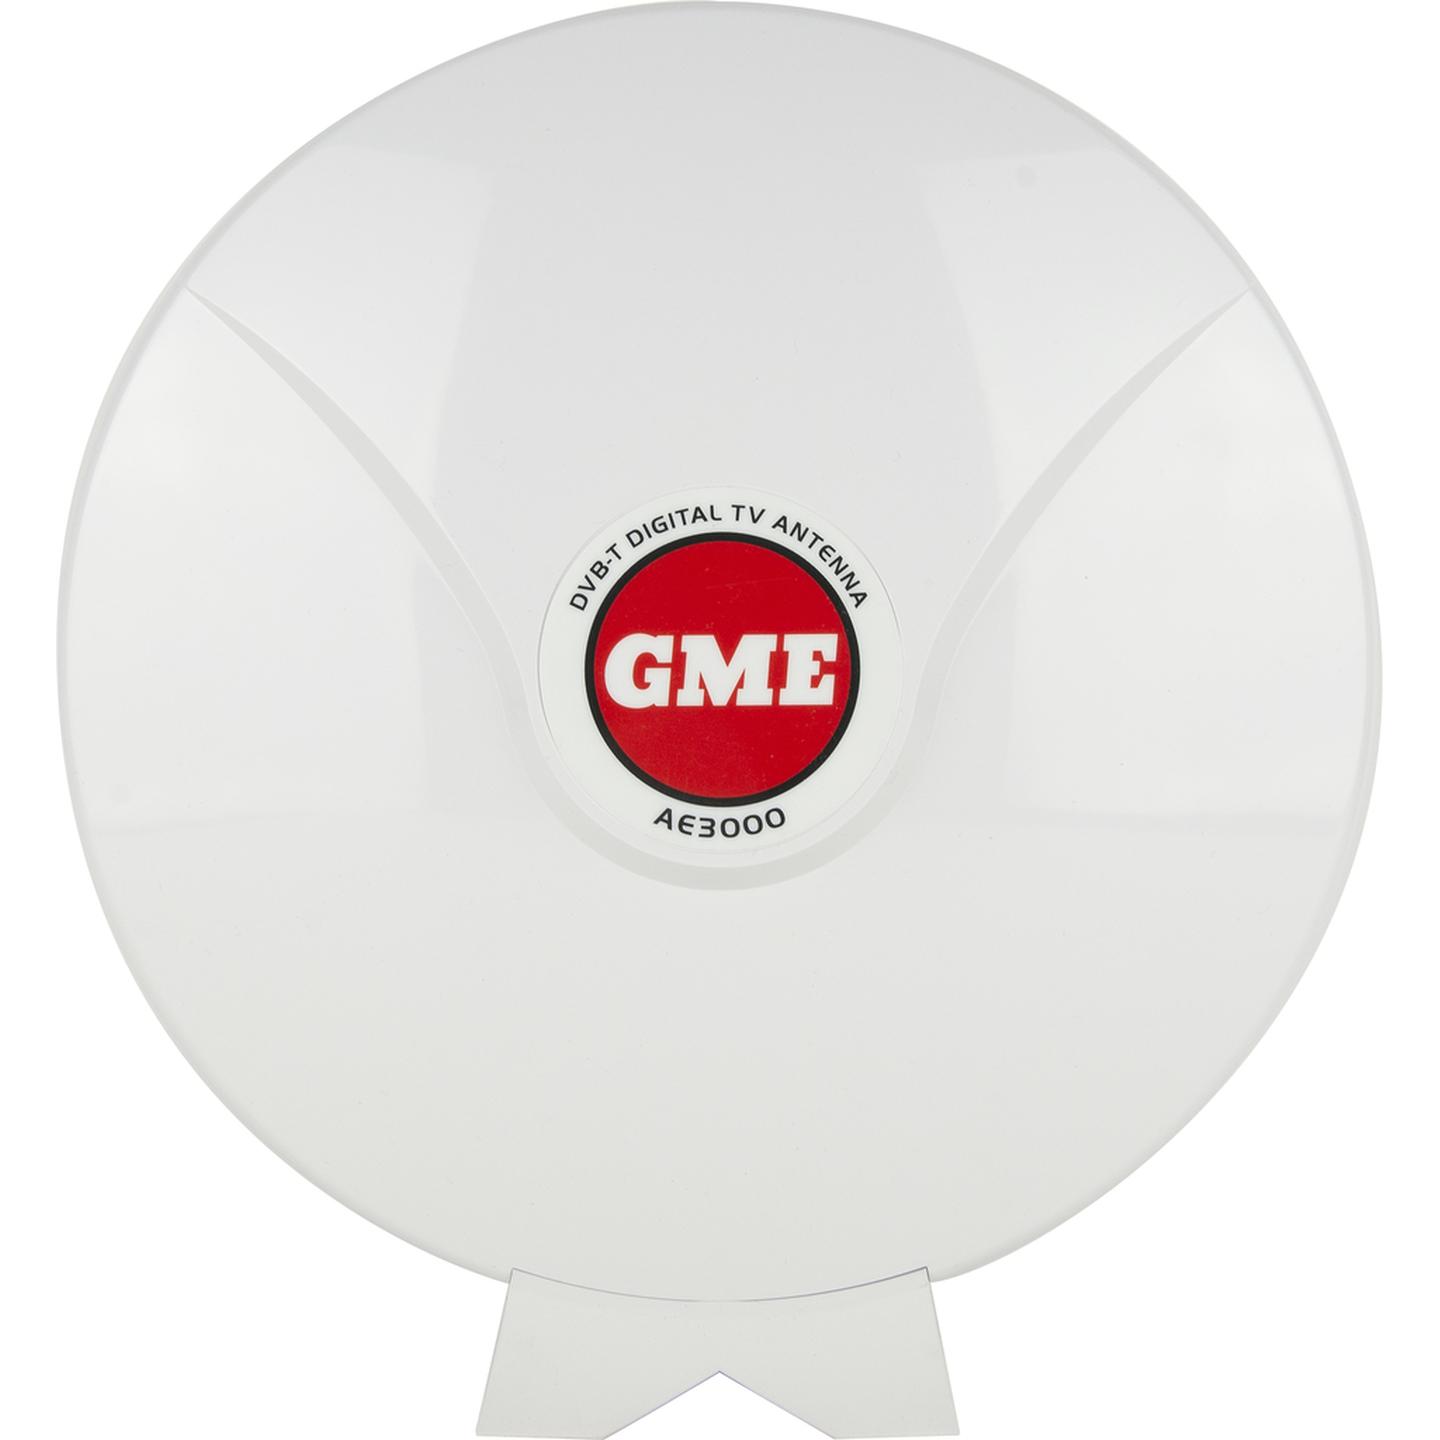 GME 280mm Diameter Omni Directional TV Antenna